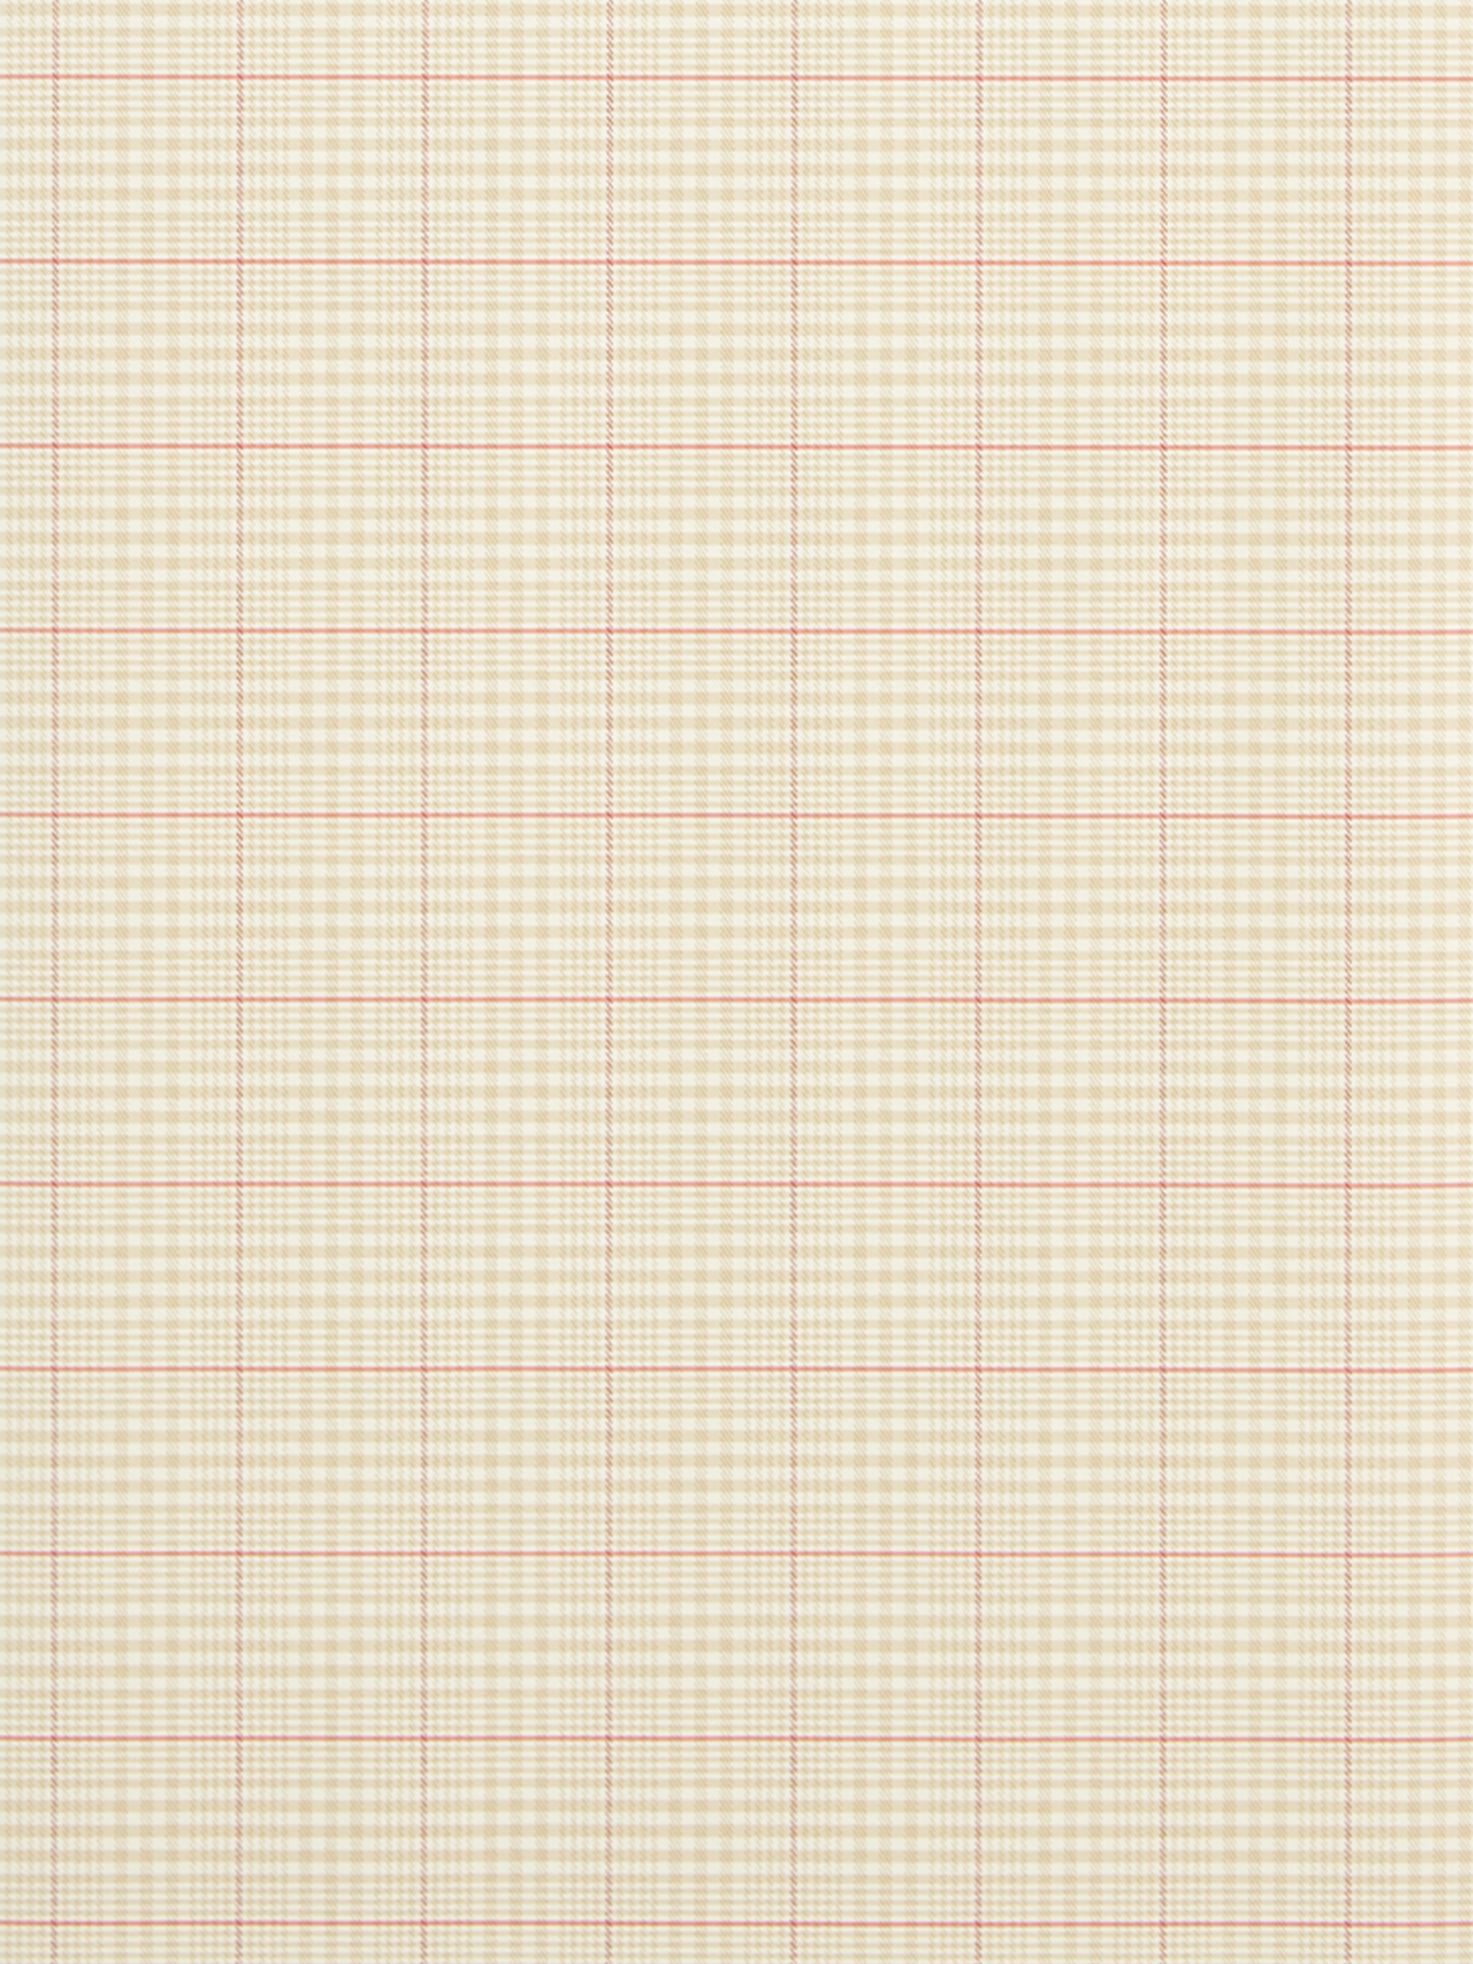 Ralph Lauren Barrington Plaid Wallpaper, Red/Tan, Prl019/04